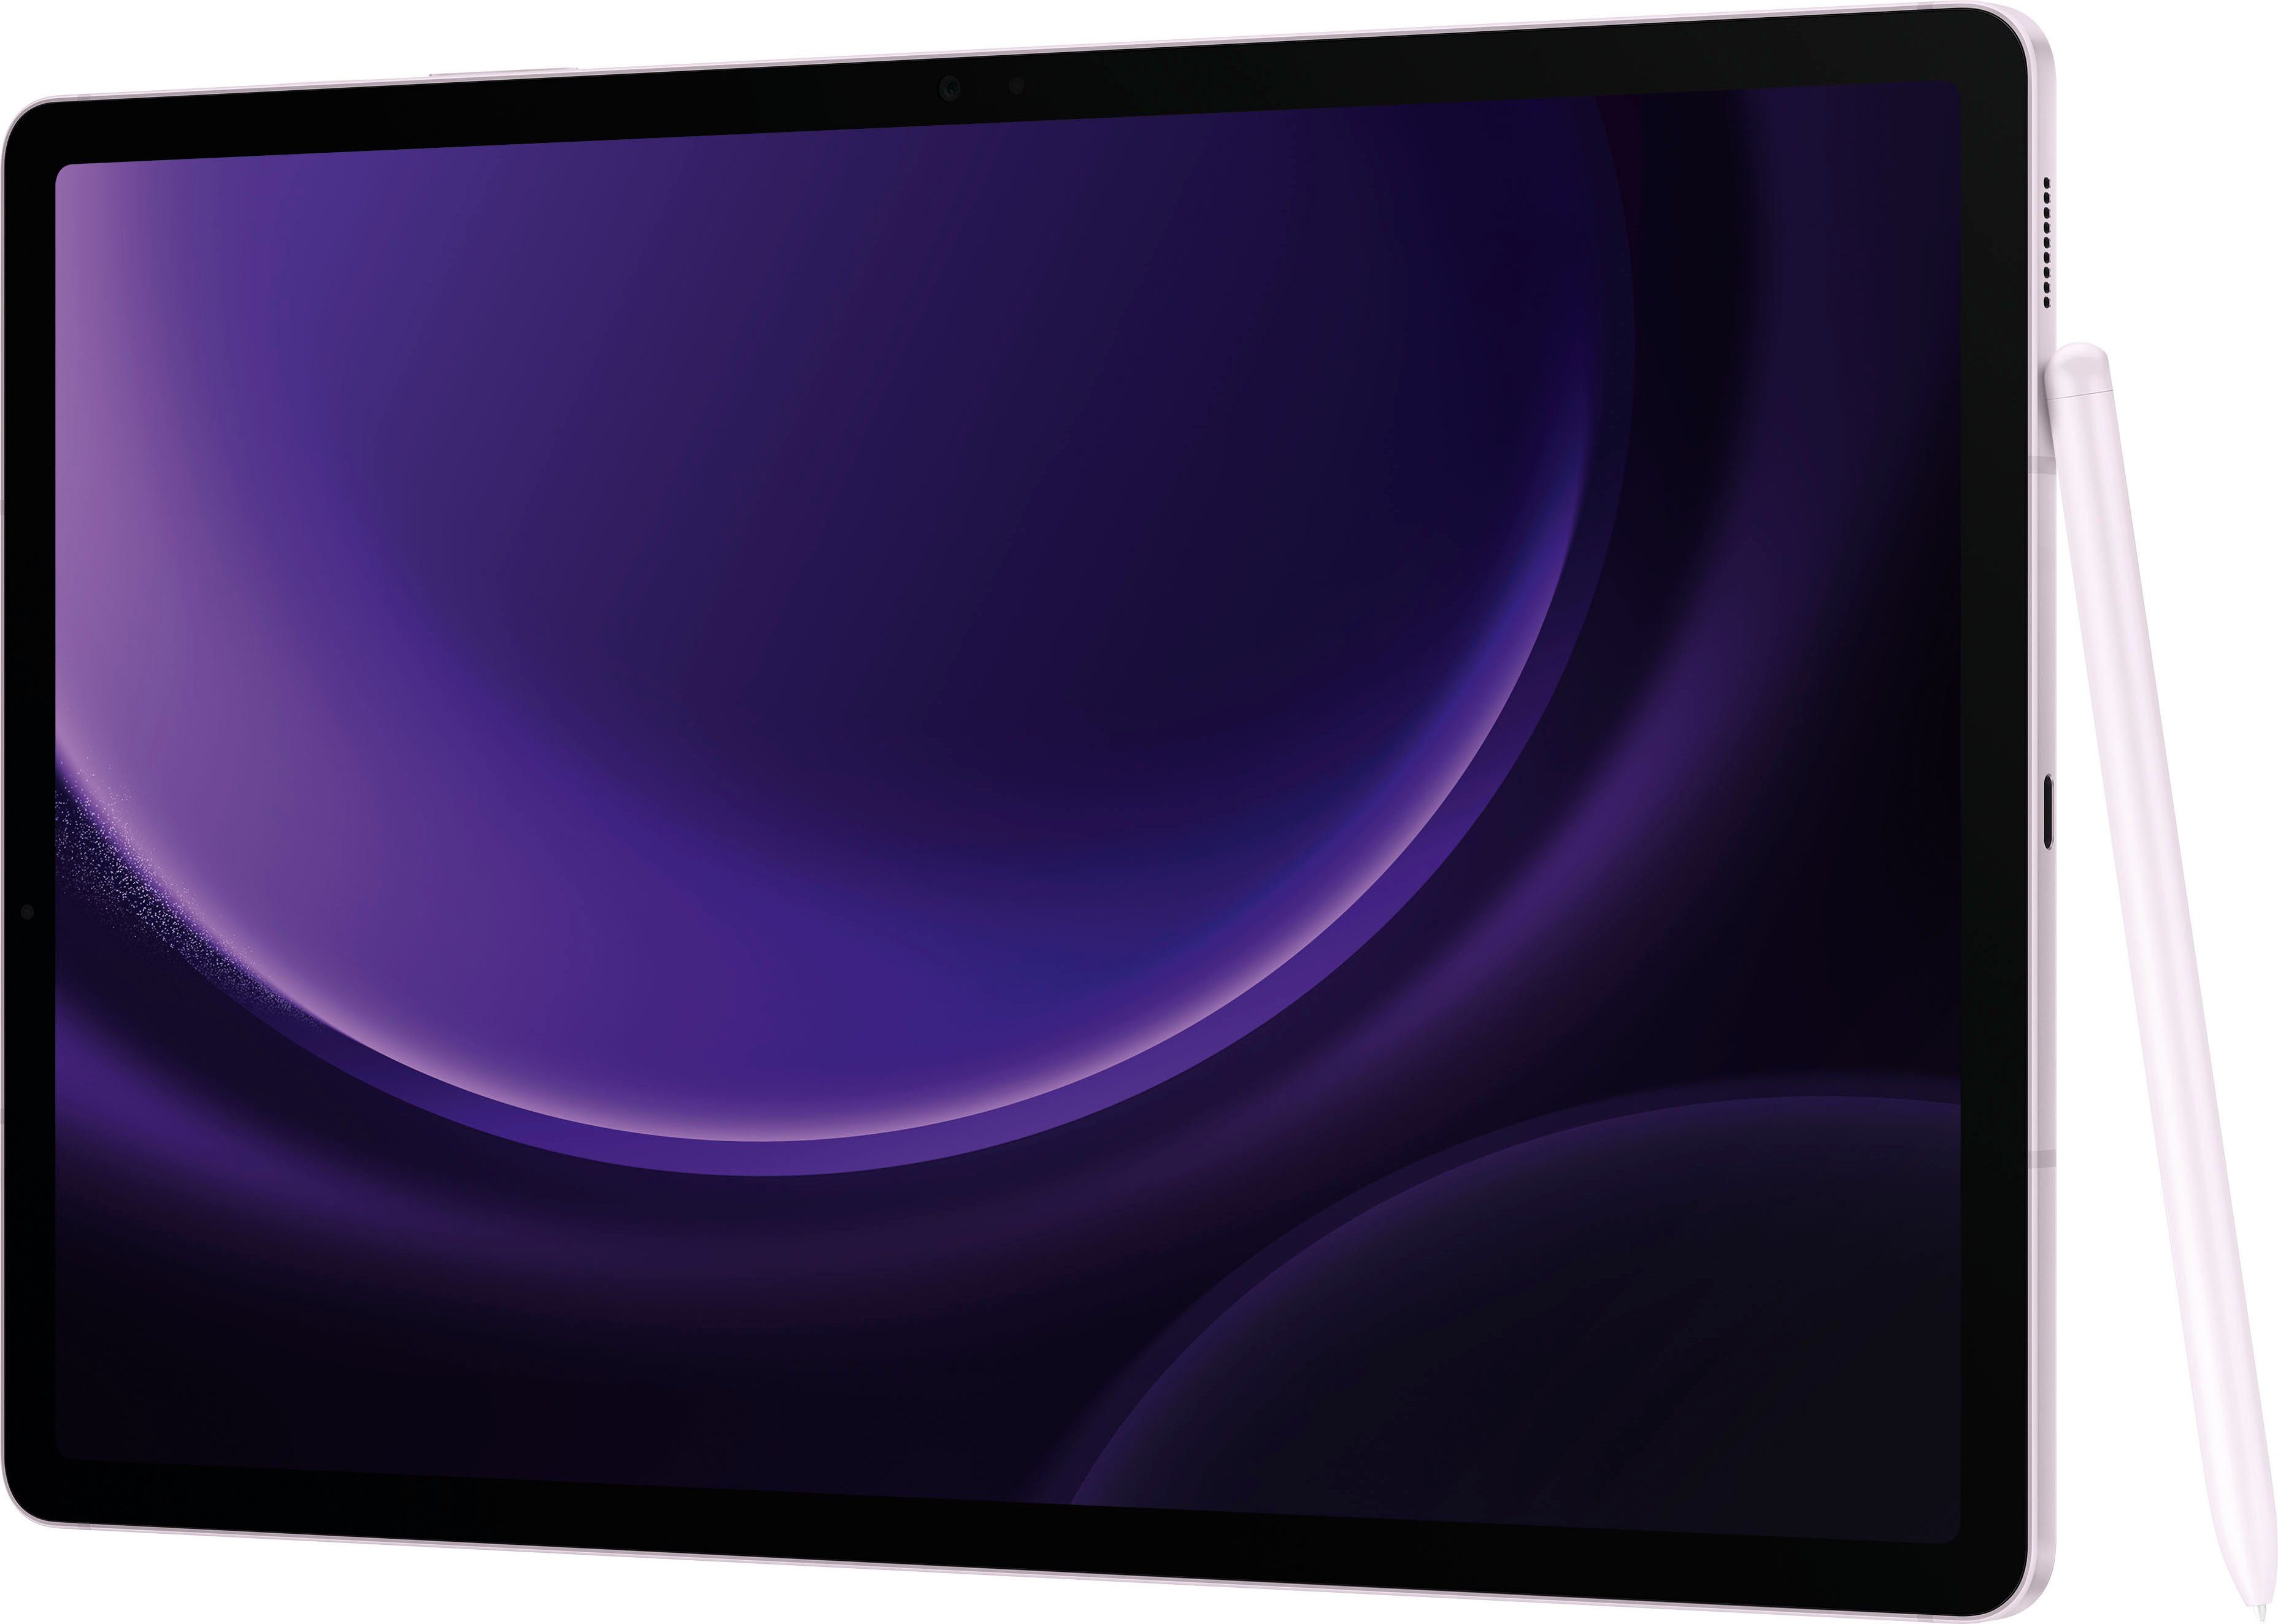 Tablet 128 Android,One Tab UI,Knox) Galaxy FE+ (12,4", lavender GB, S9 Samsung